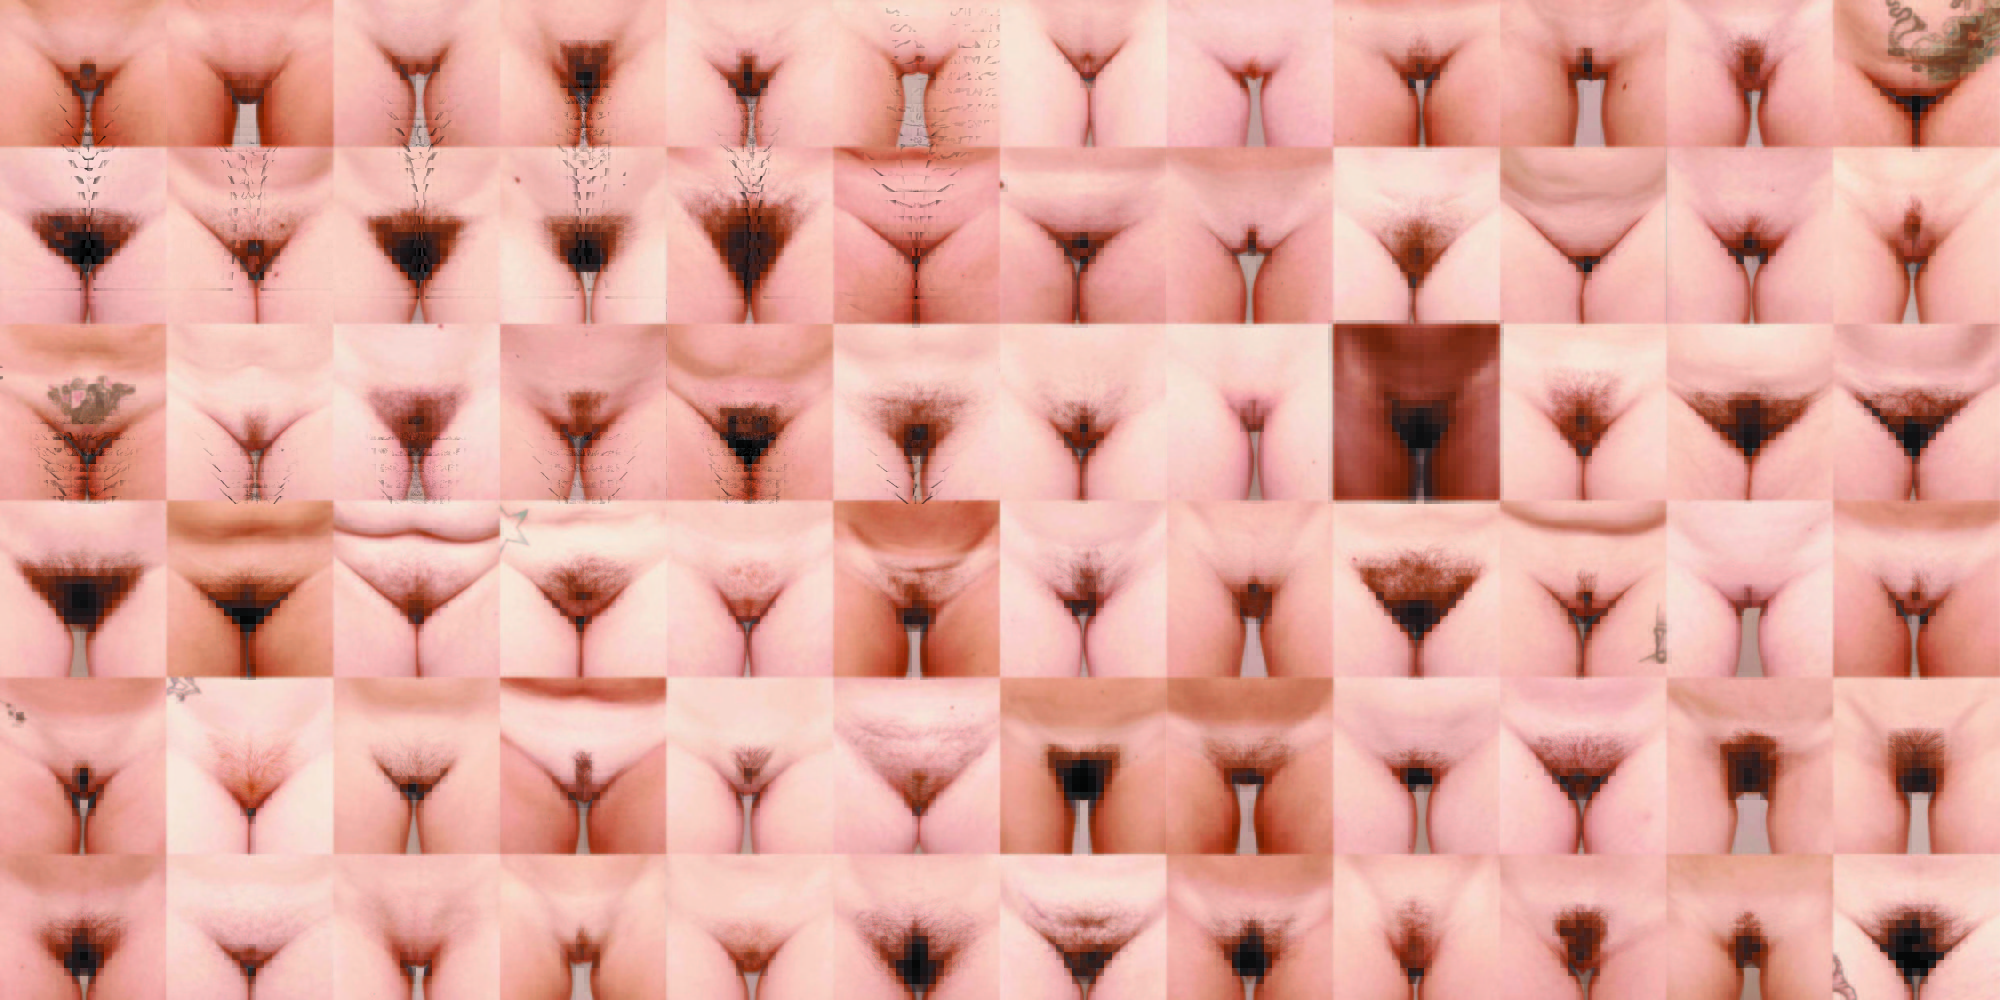 Photos Of Shaved Vagina 31